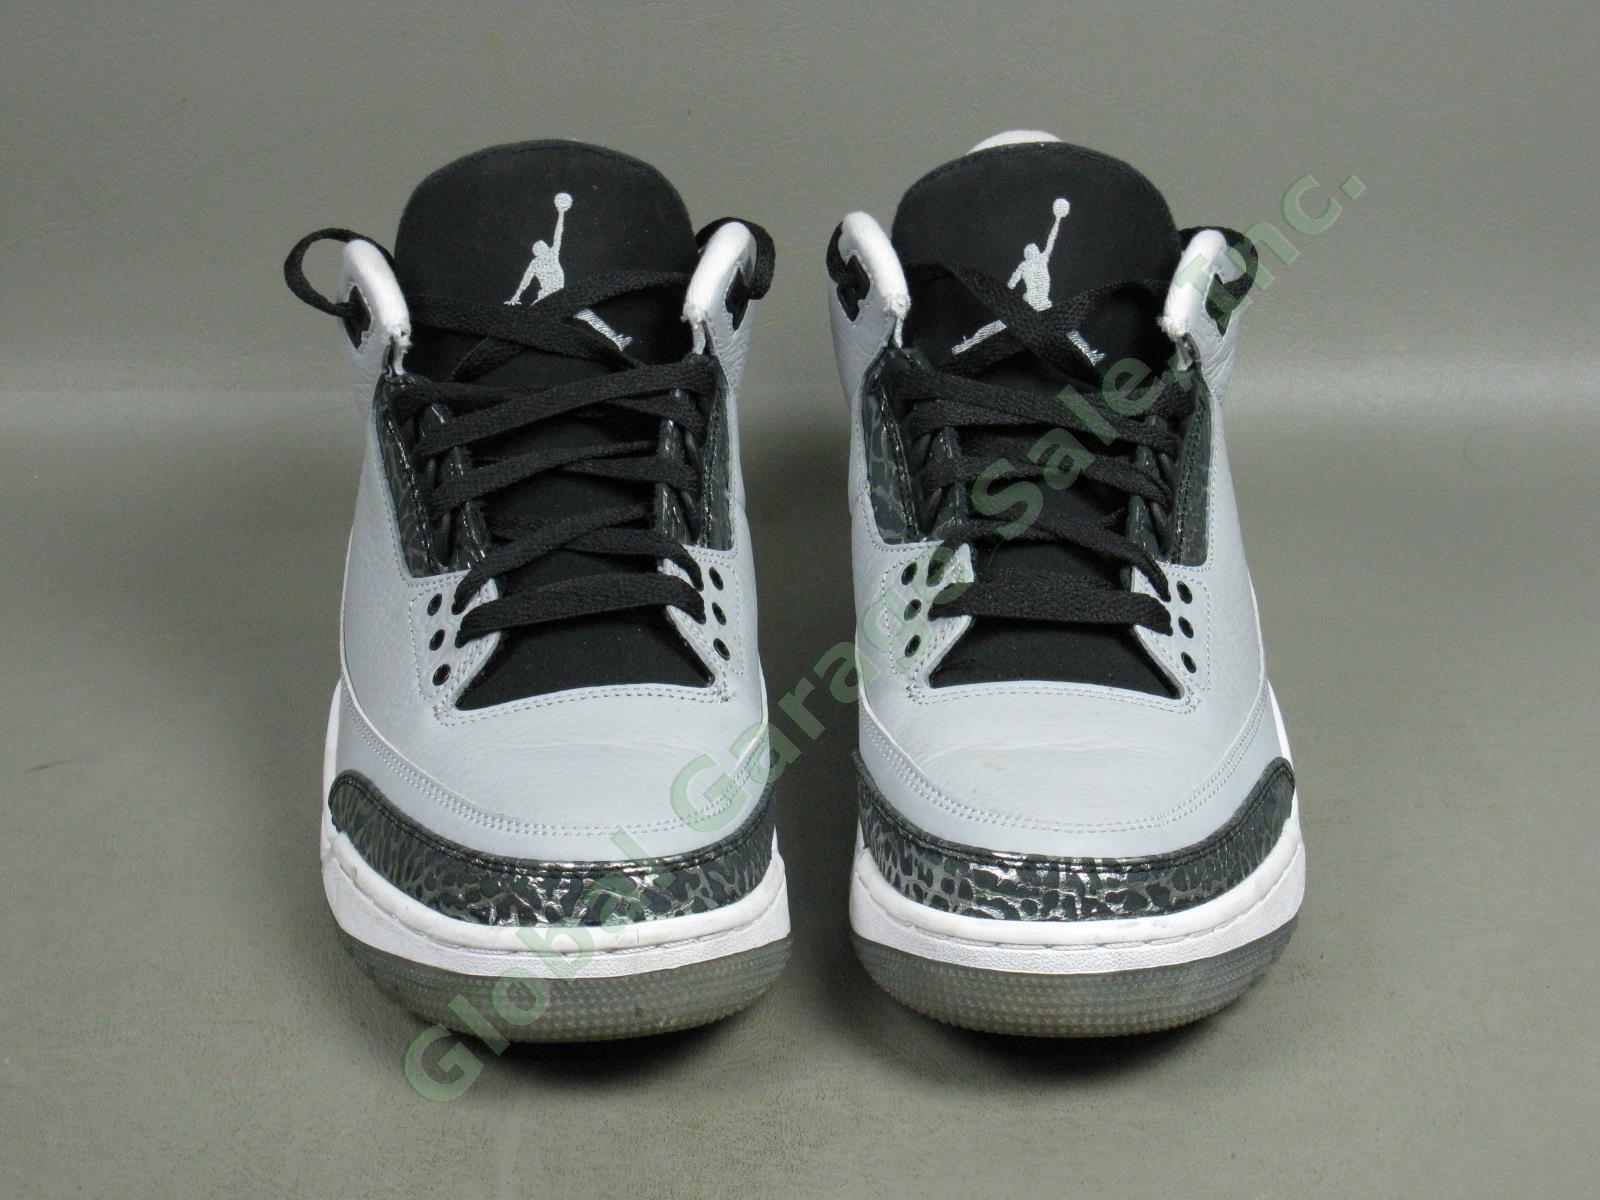 Nike Air Jordan 3 Retro Wolf Grey Basketball Shoes Size US 9 EUR 42.5 136064-004 1